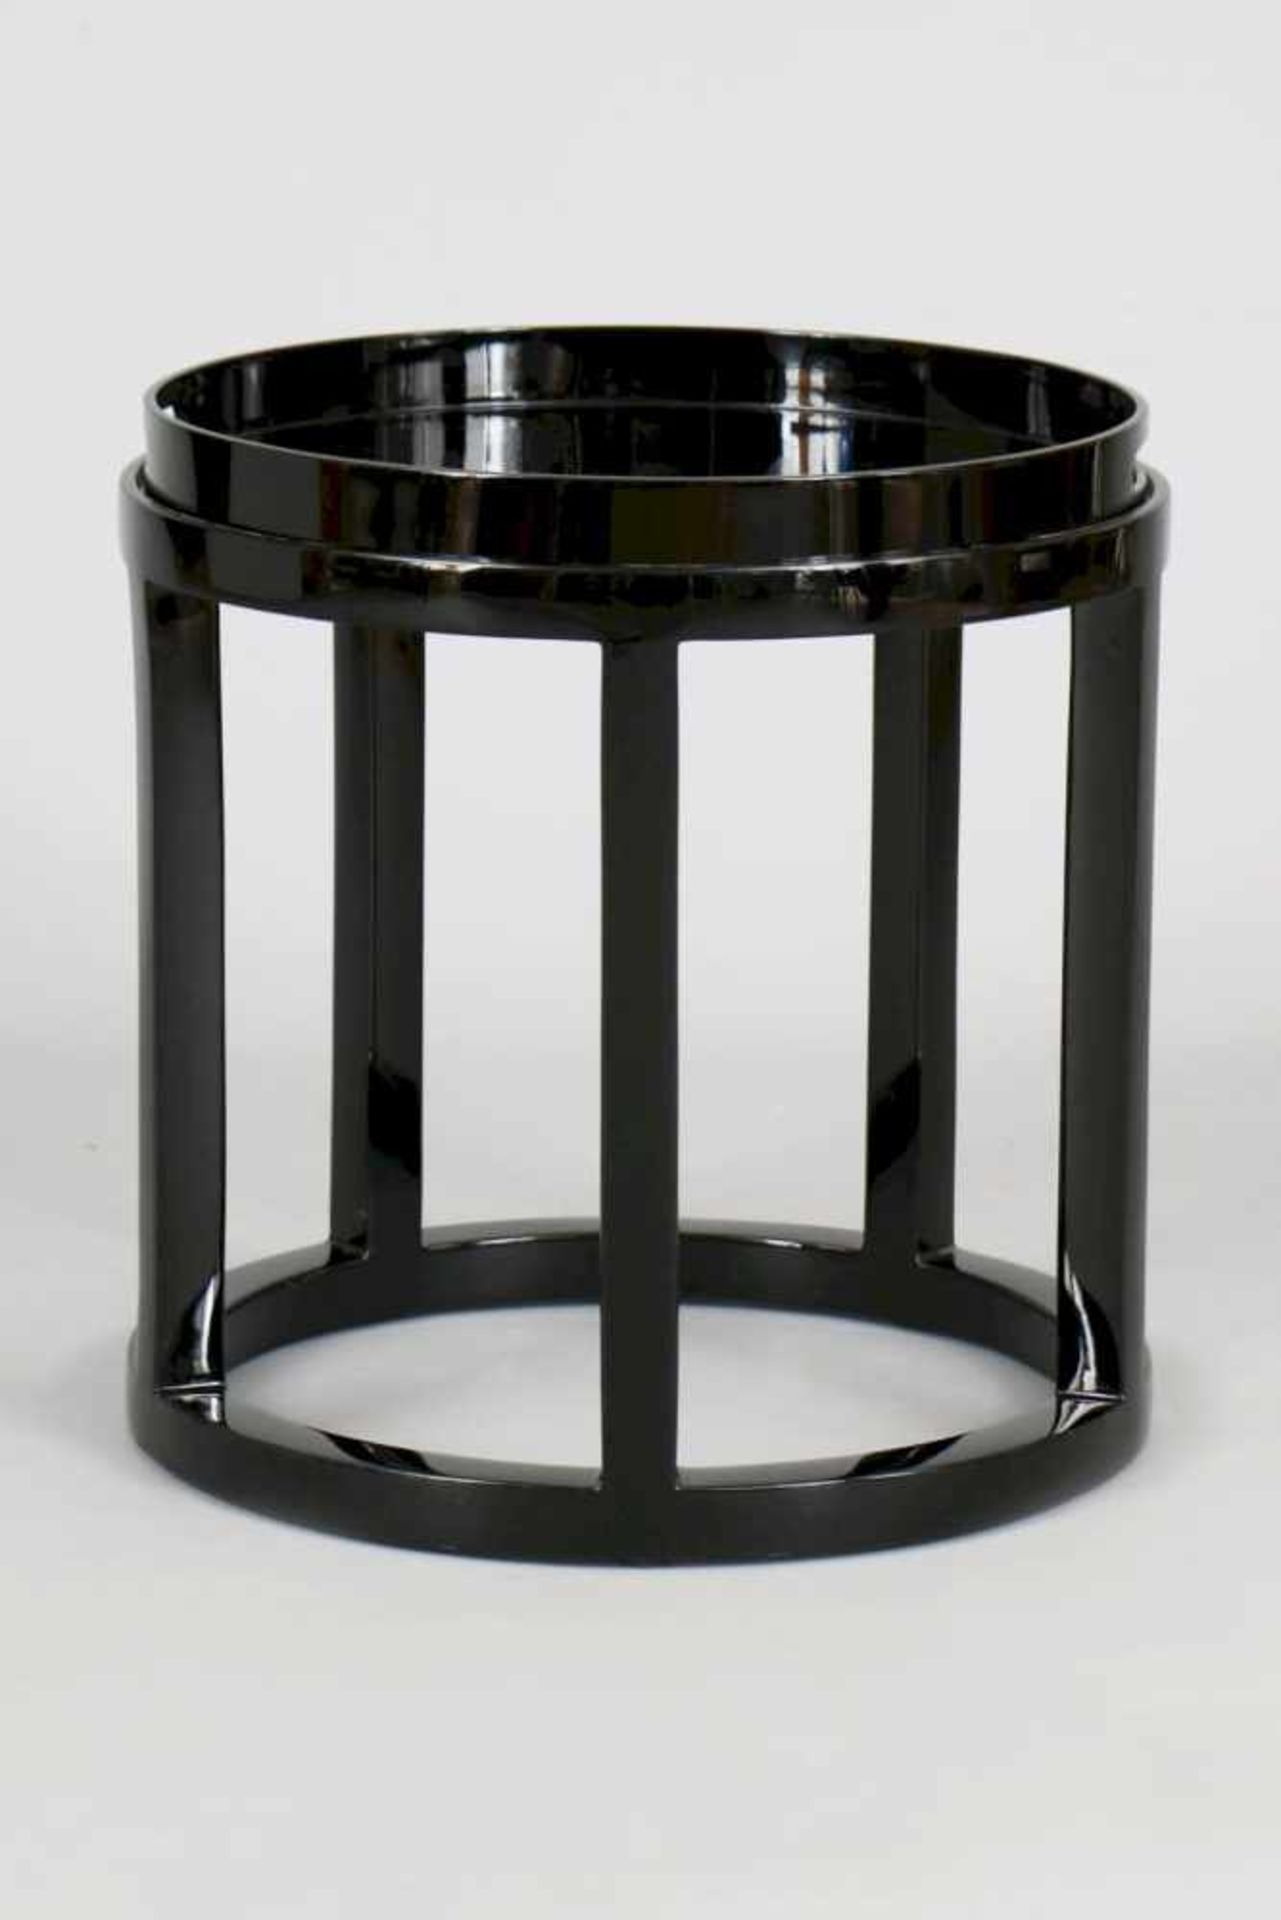 LAMBERT Beistell-/Tablett-TischchenHolz, schwarz lackiert, rund, abnehmbares Tablett mit 2